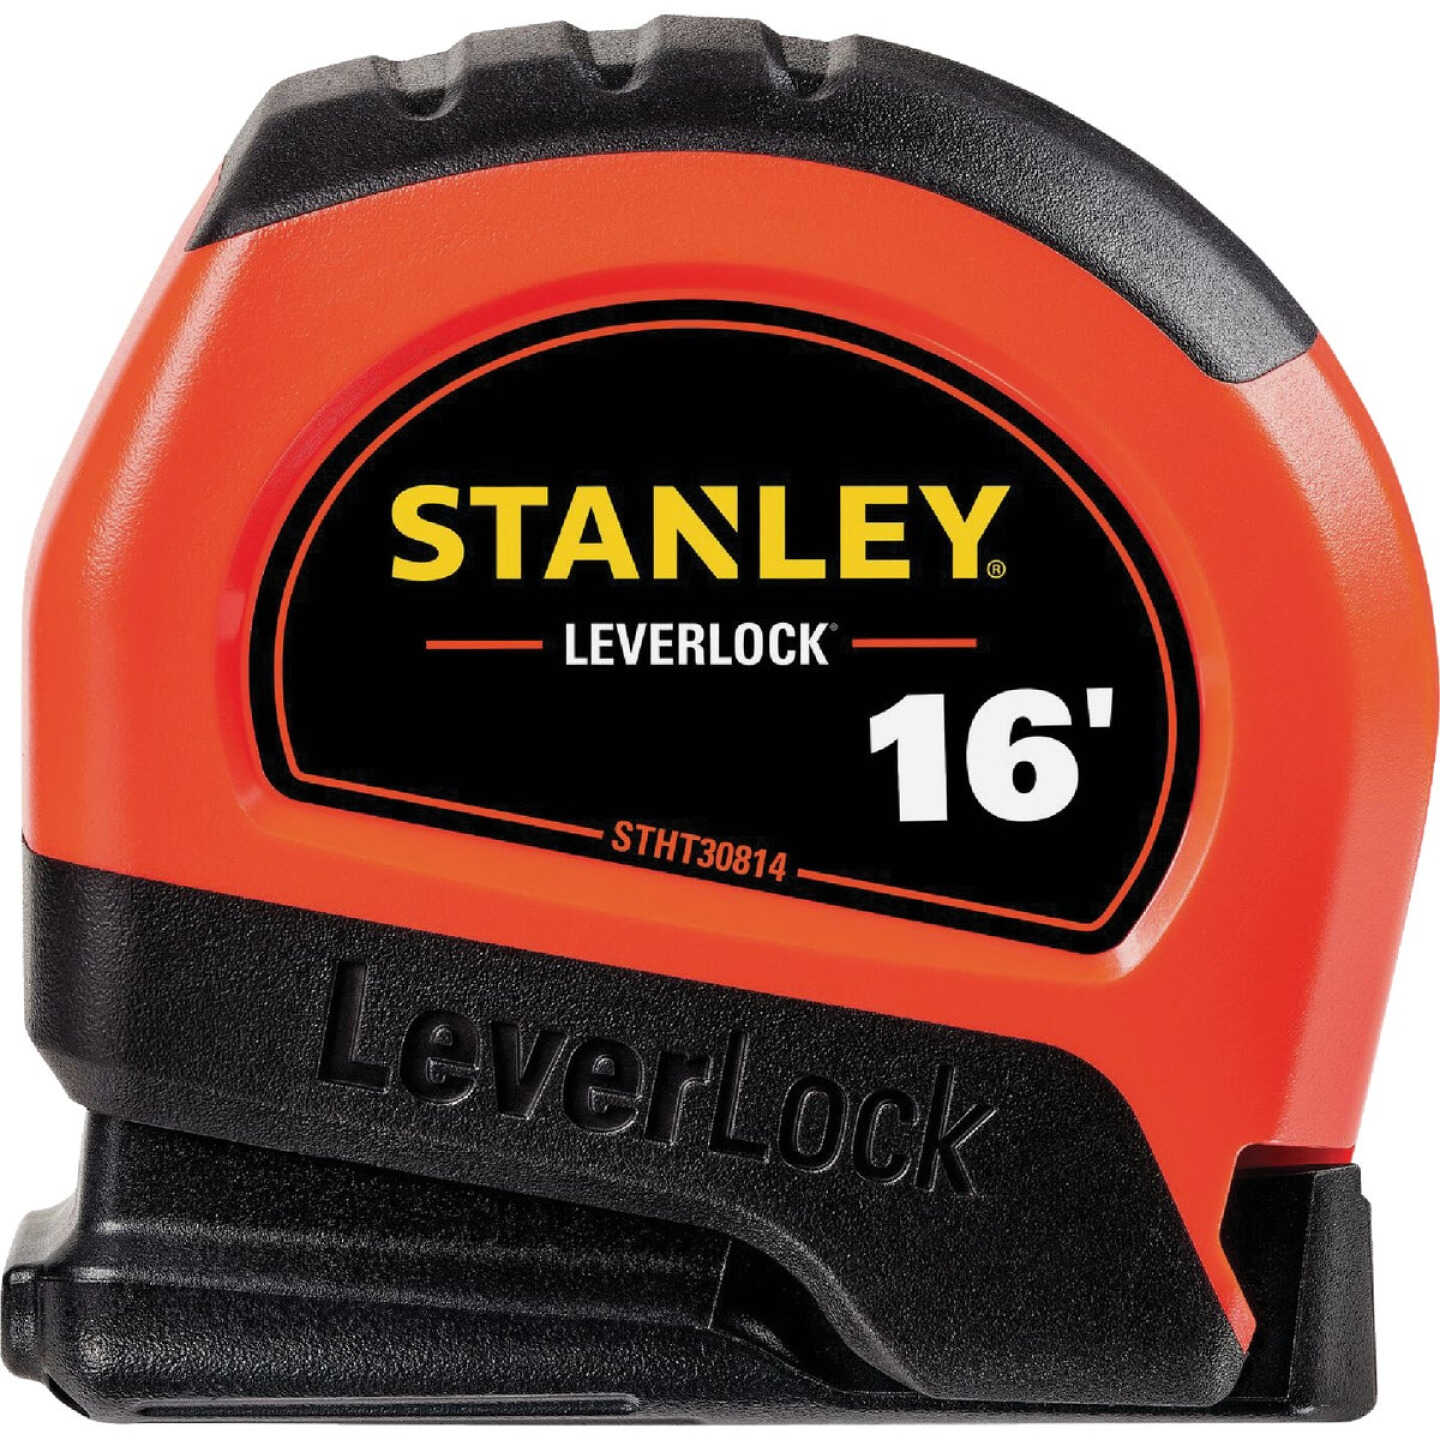 Stanley LeverLock 16 Ft. Tape Measure - Groom & Sons' Hardware